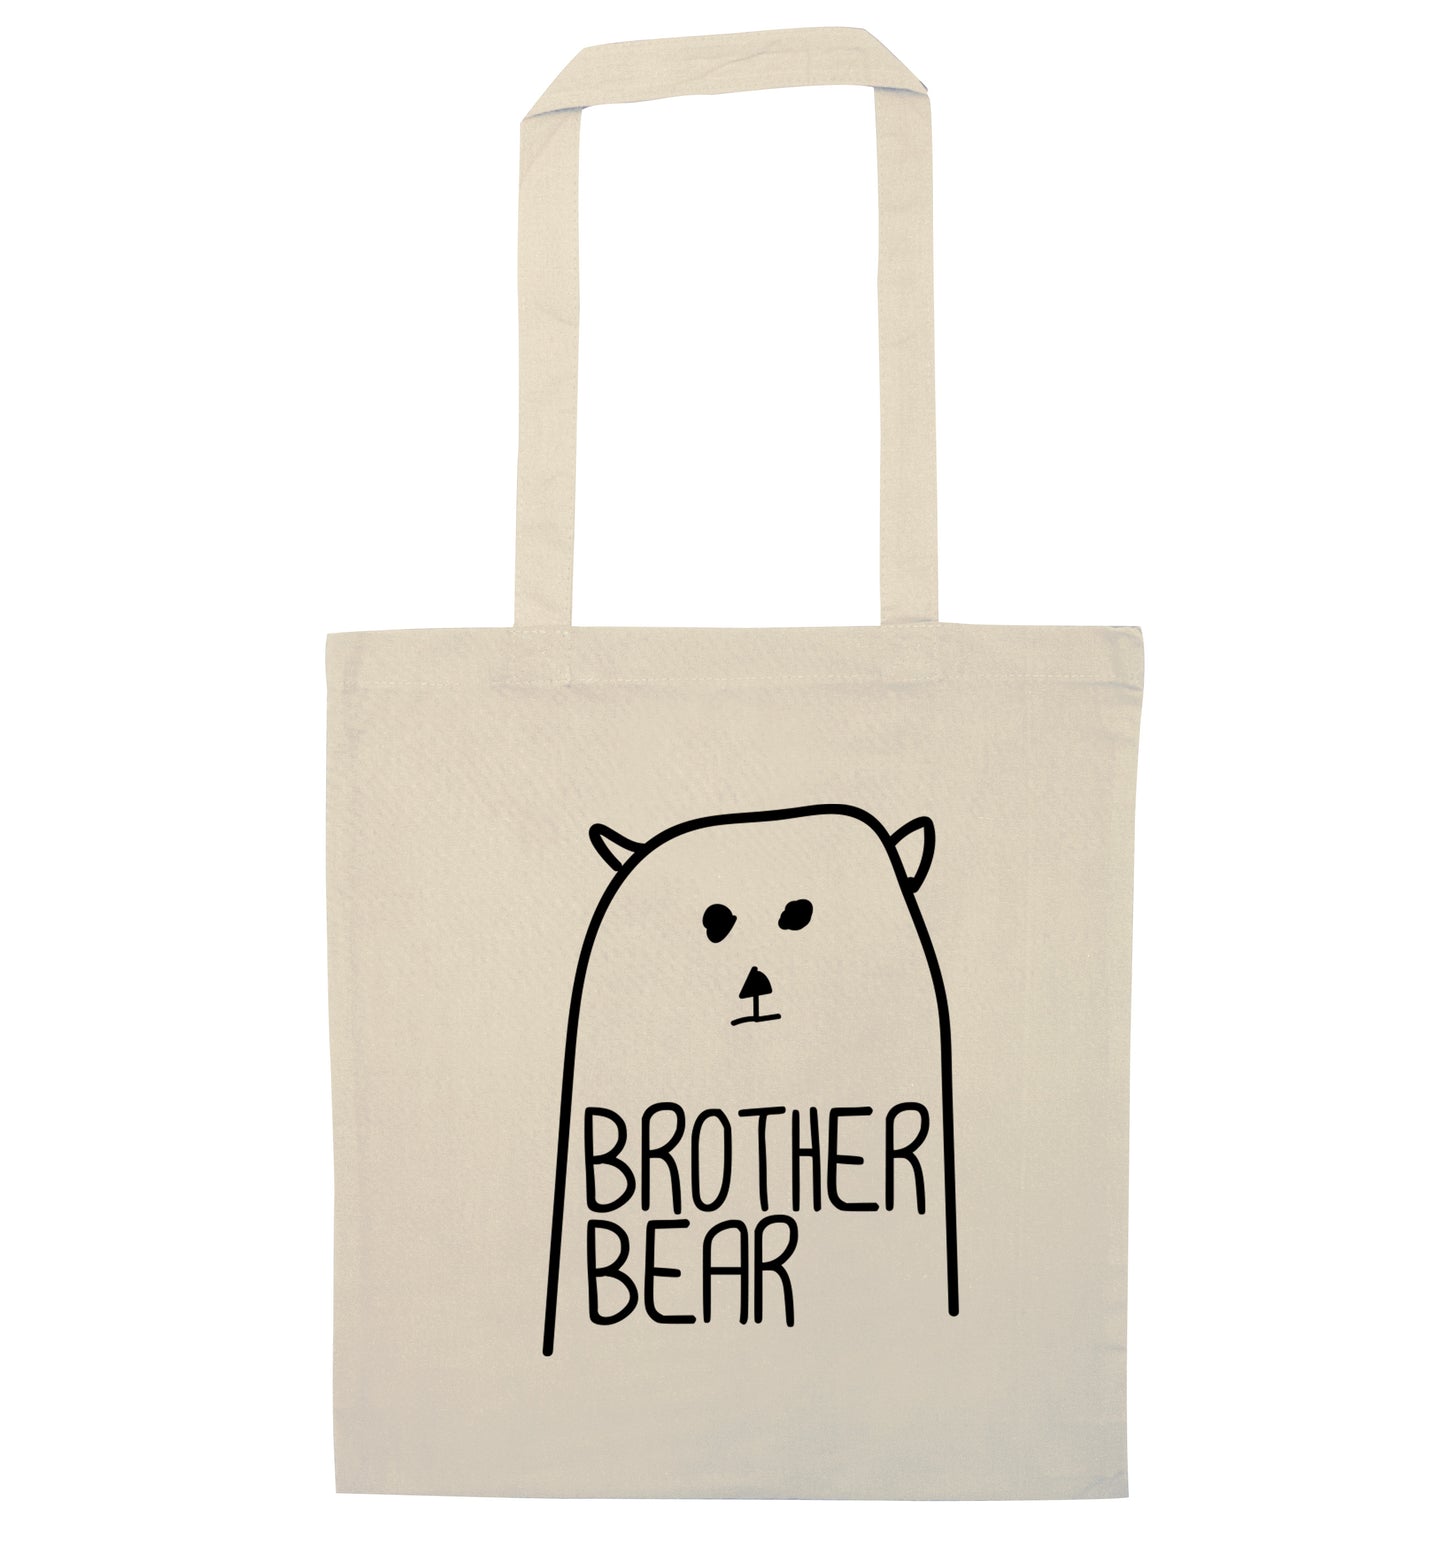 Brother bear natural tote bag